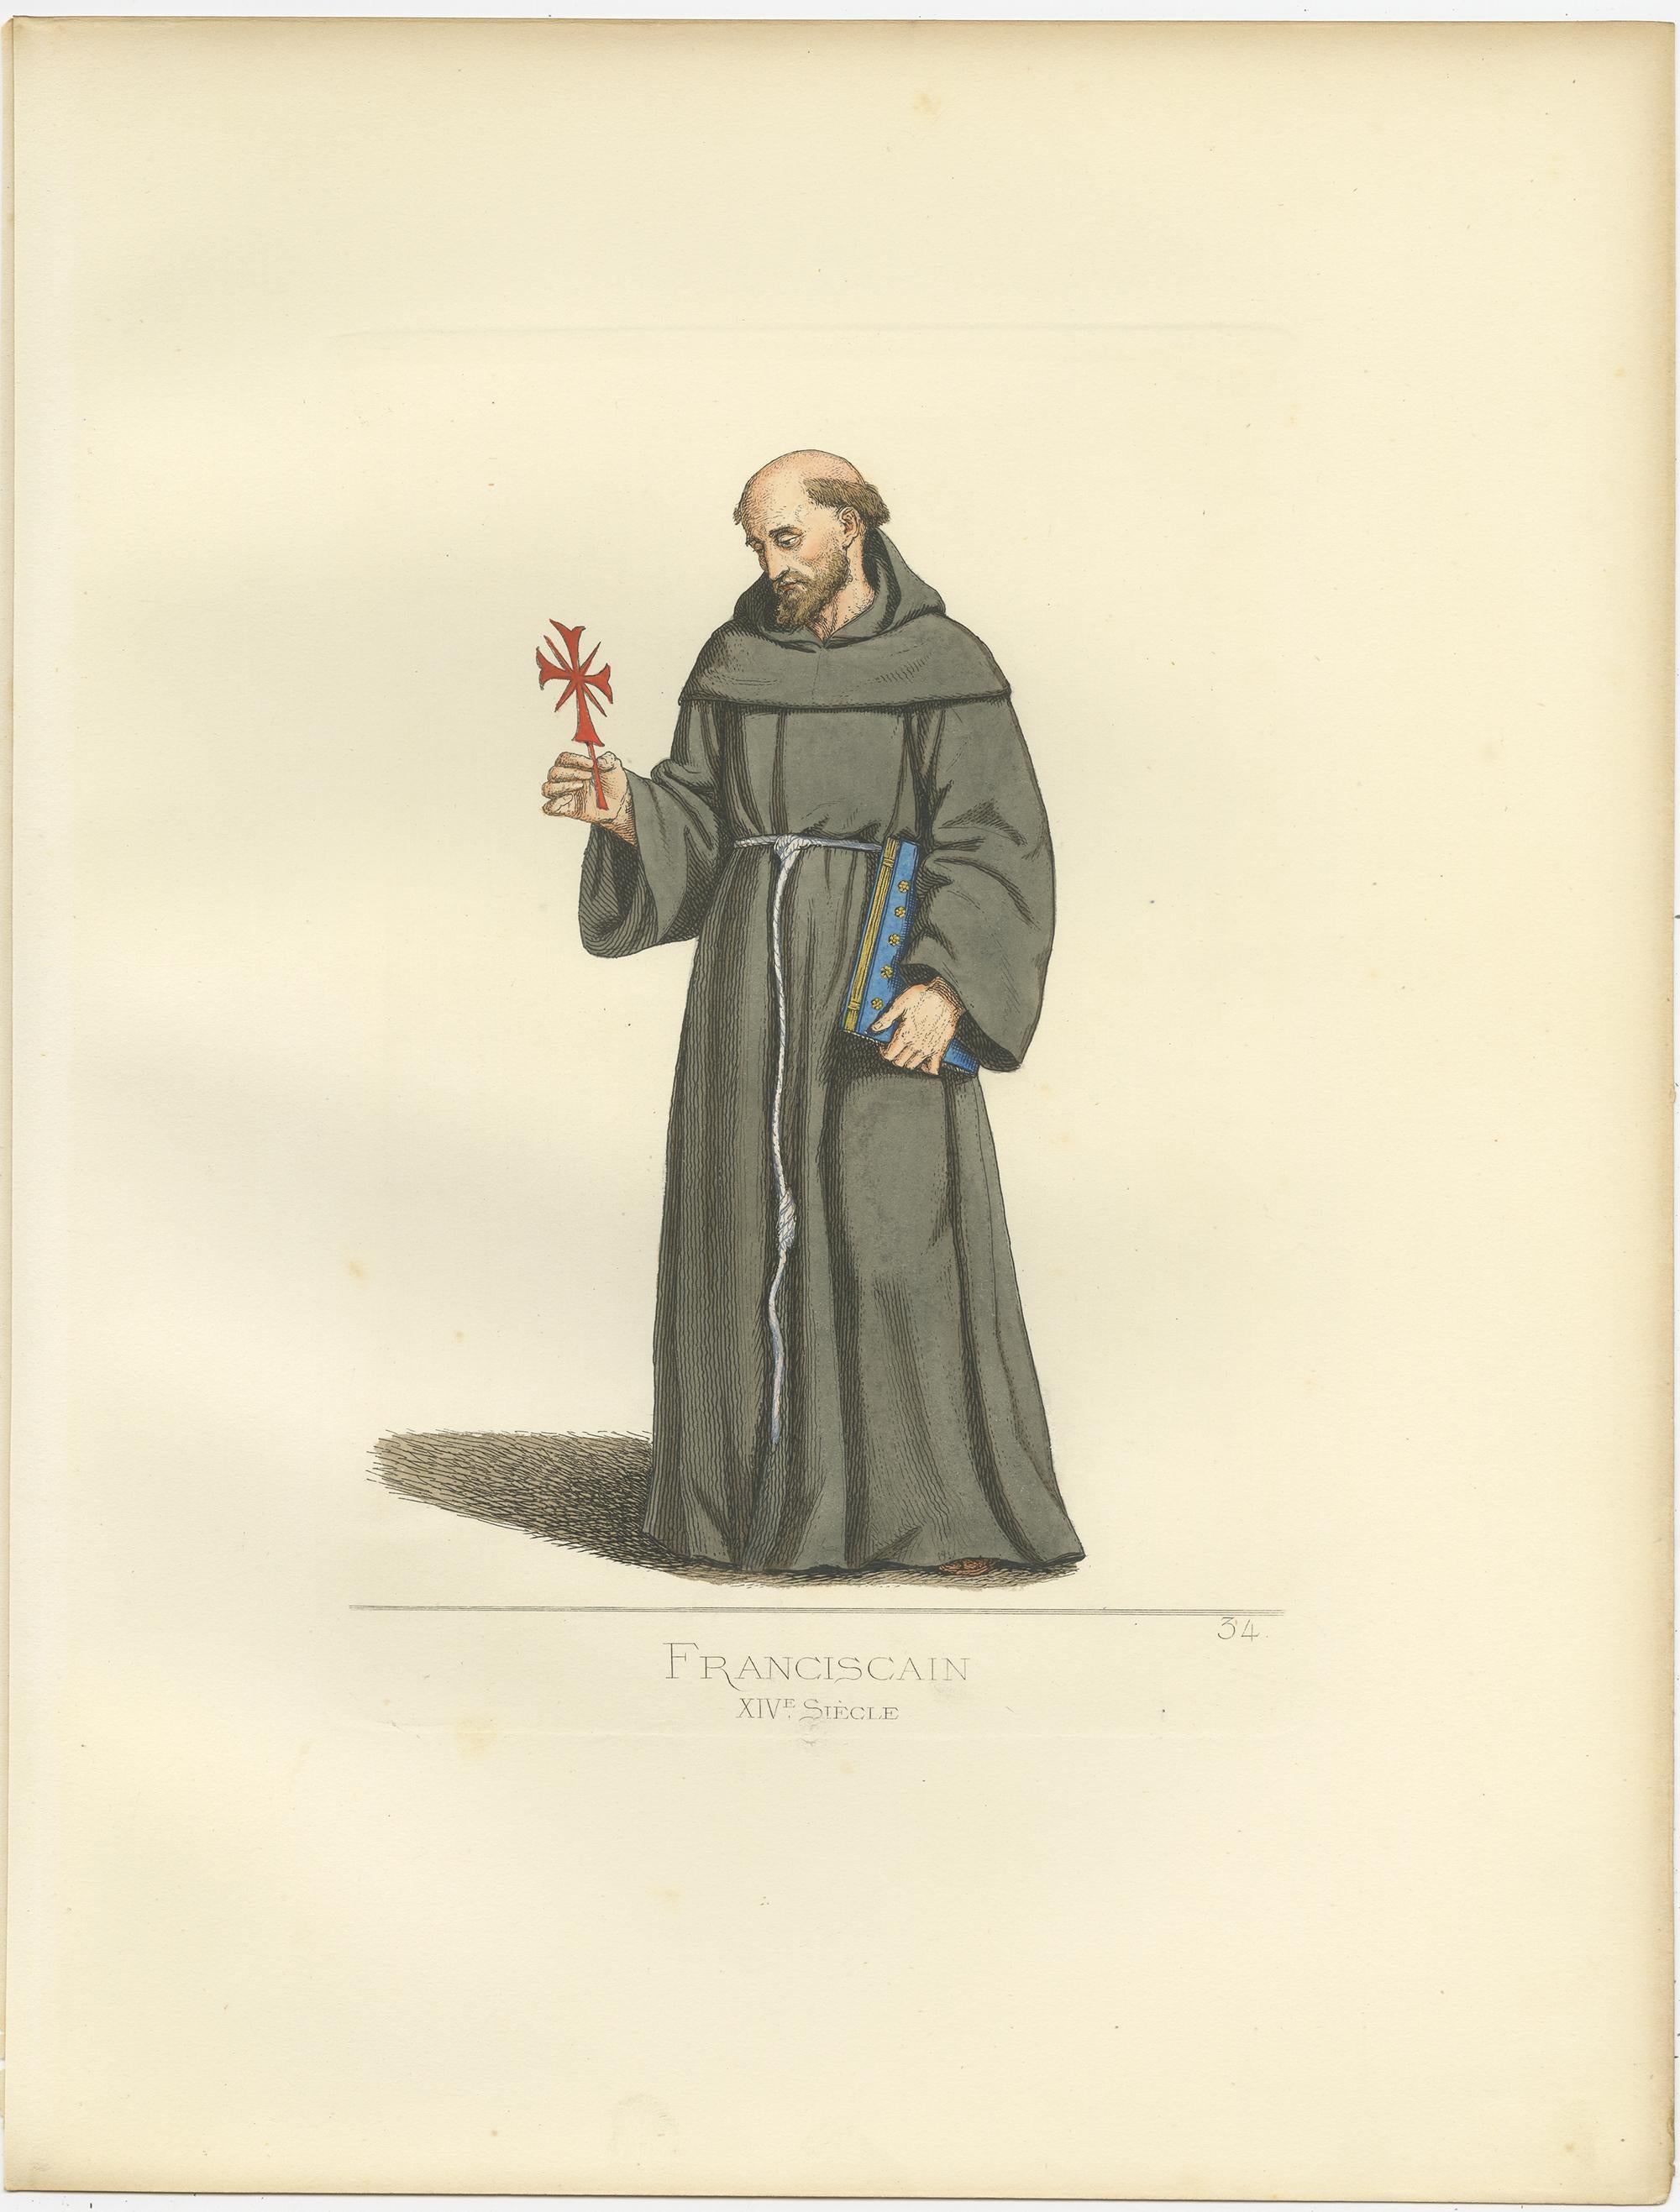 fransiscan monk